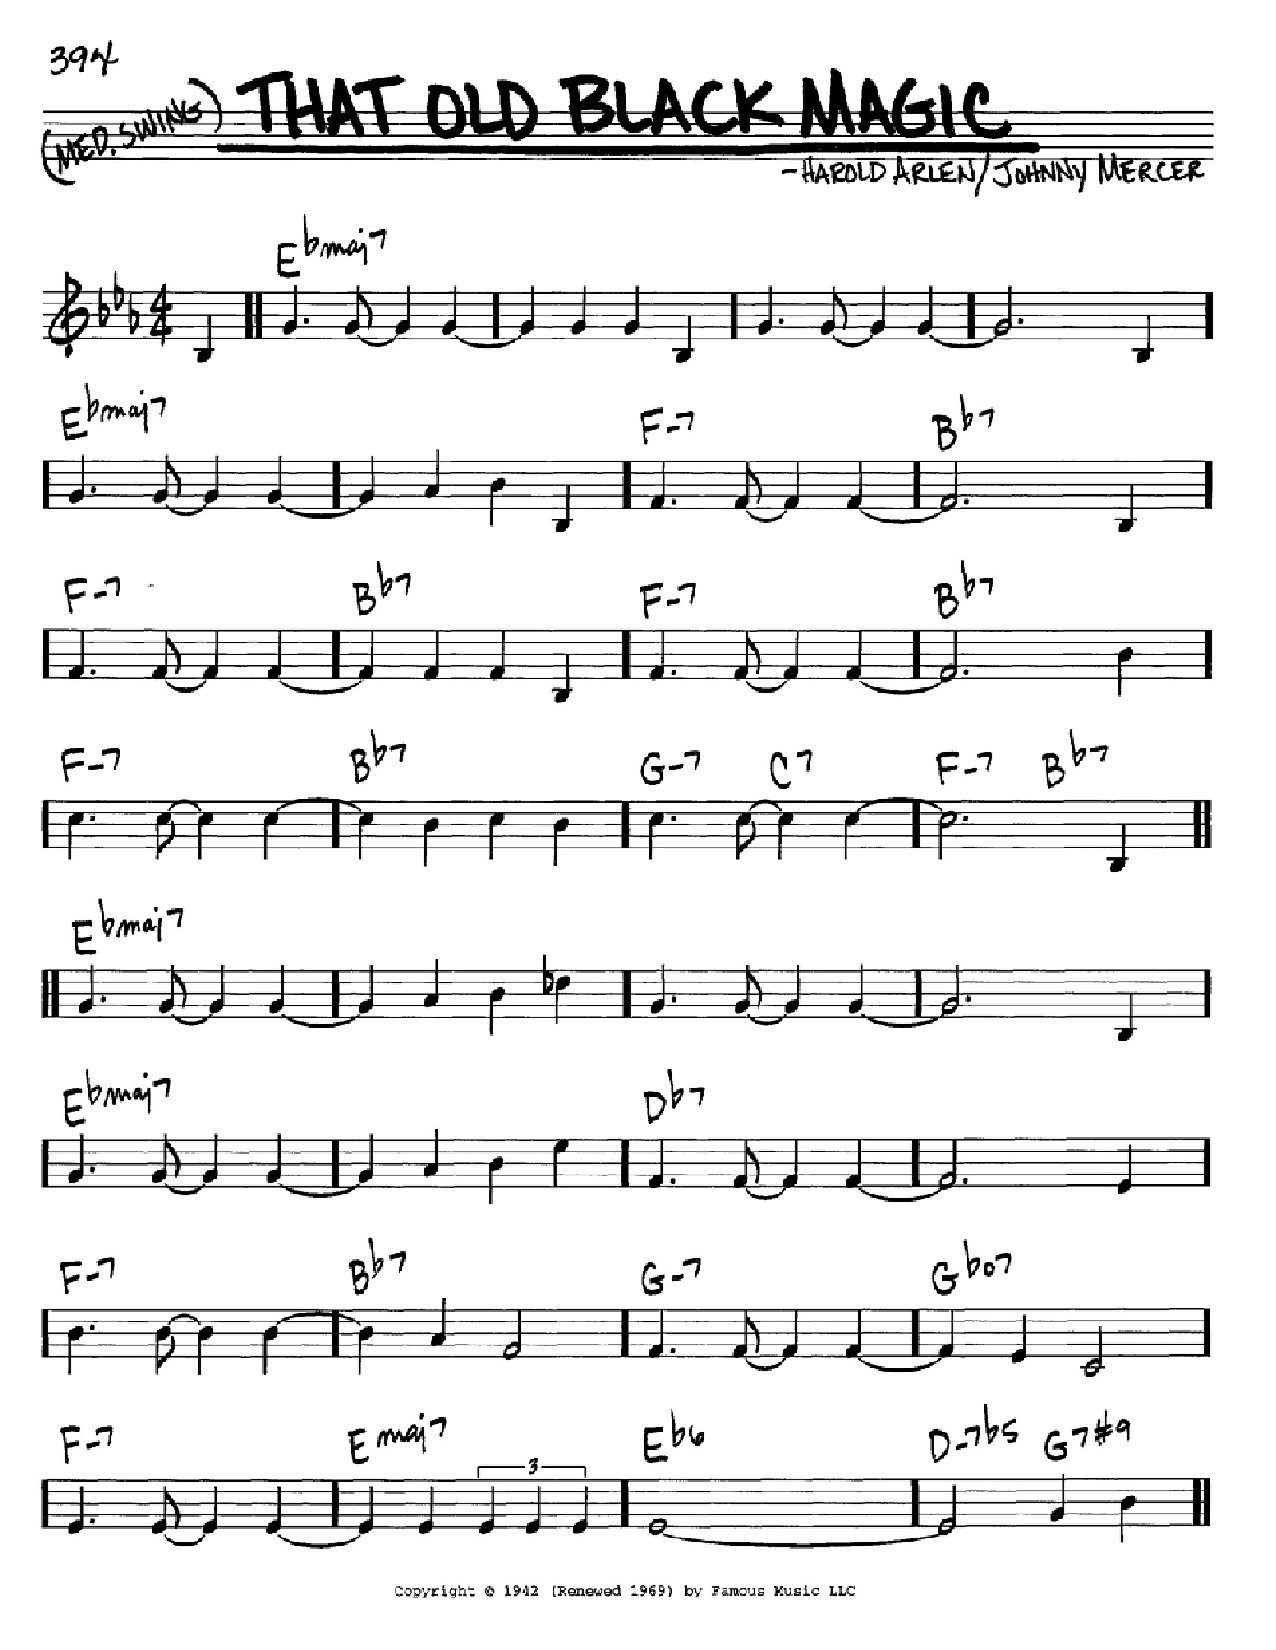 Harold Arlen That Old Black Magic Sheet Music Notes & Chords for Lead Sheet / Fake Book - Download or Print PDF